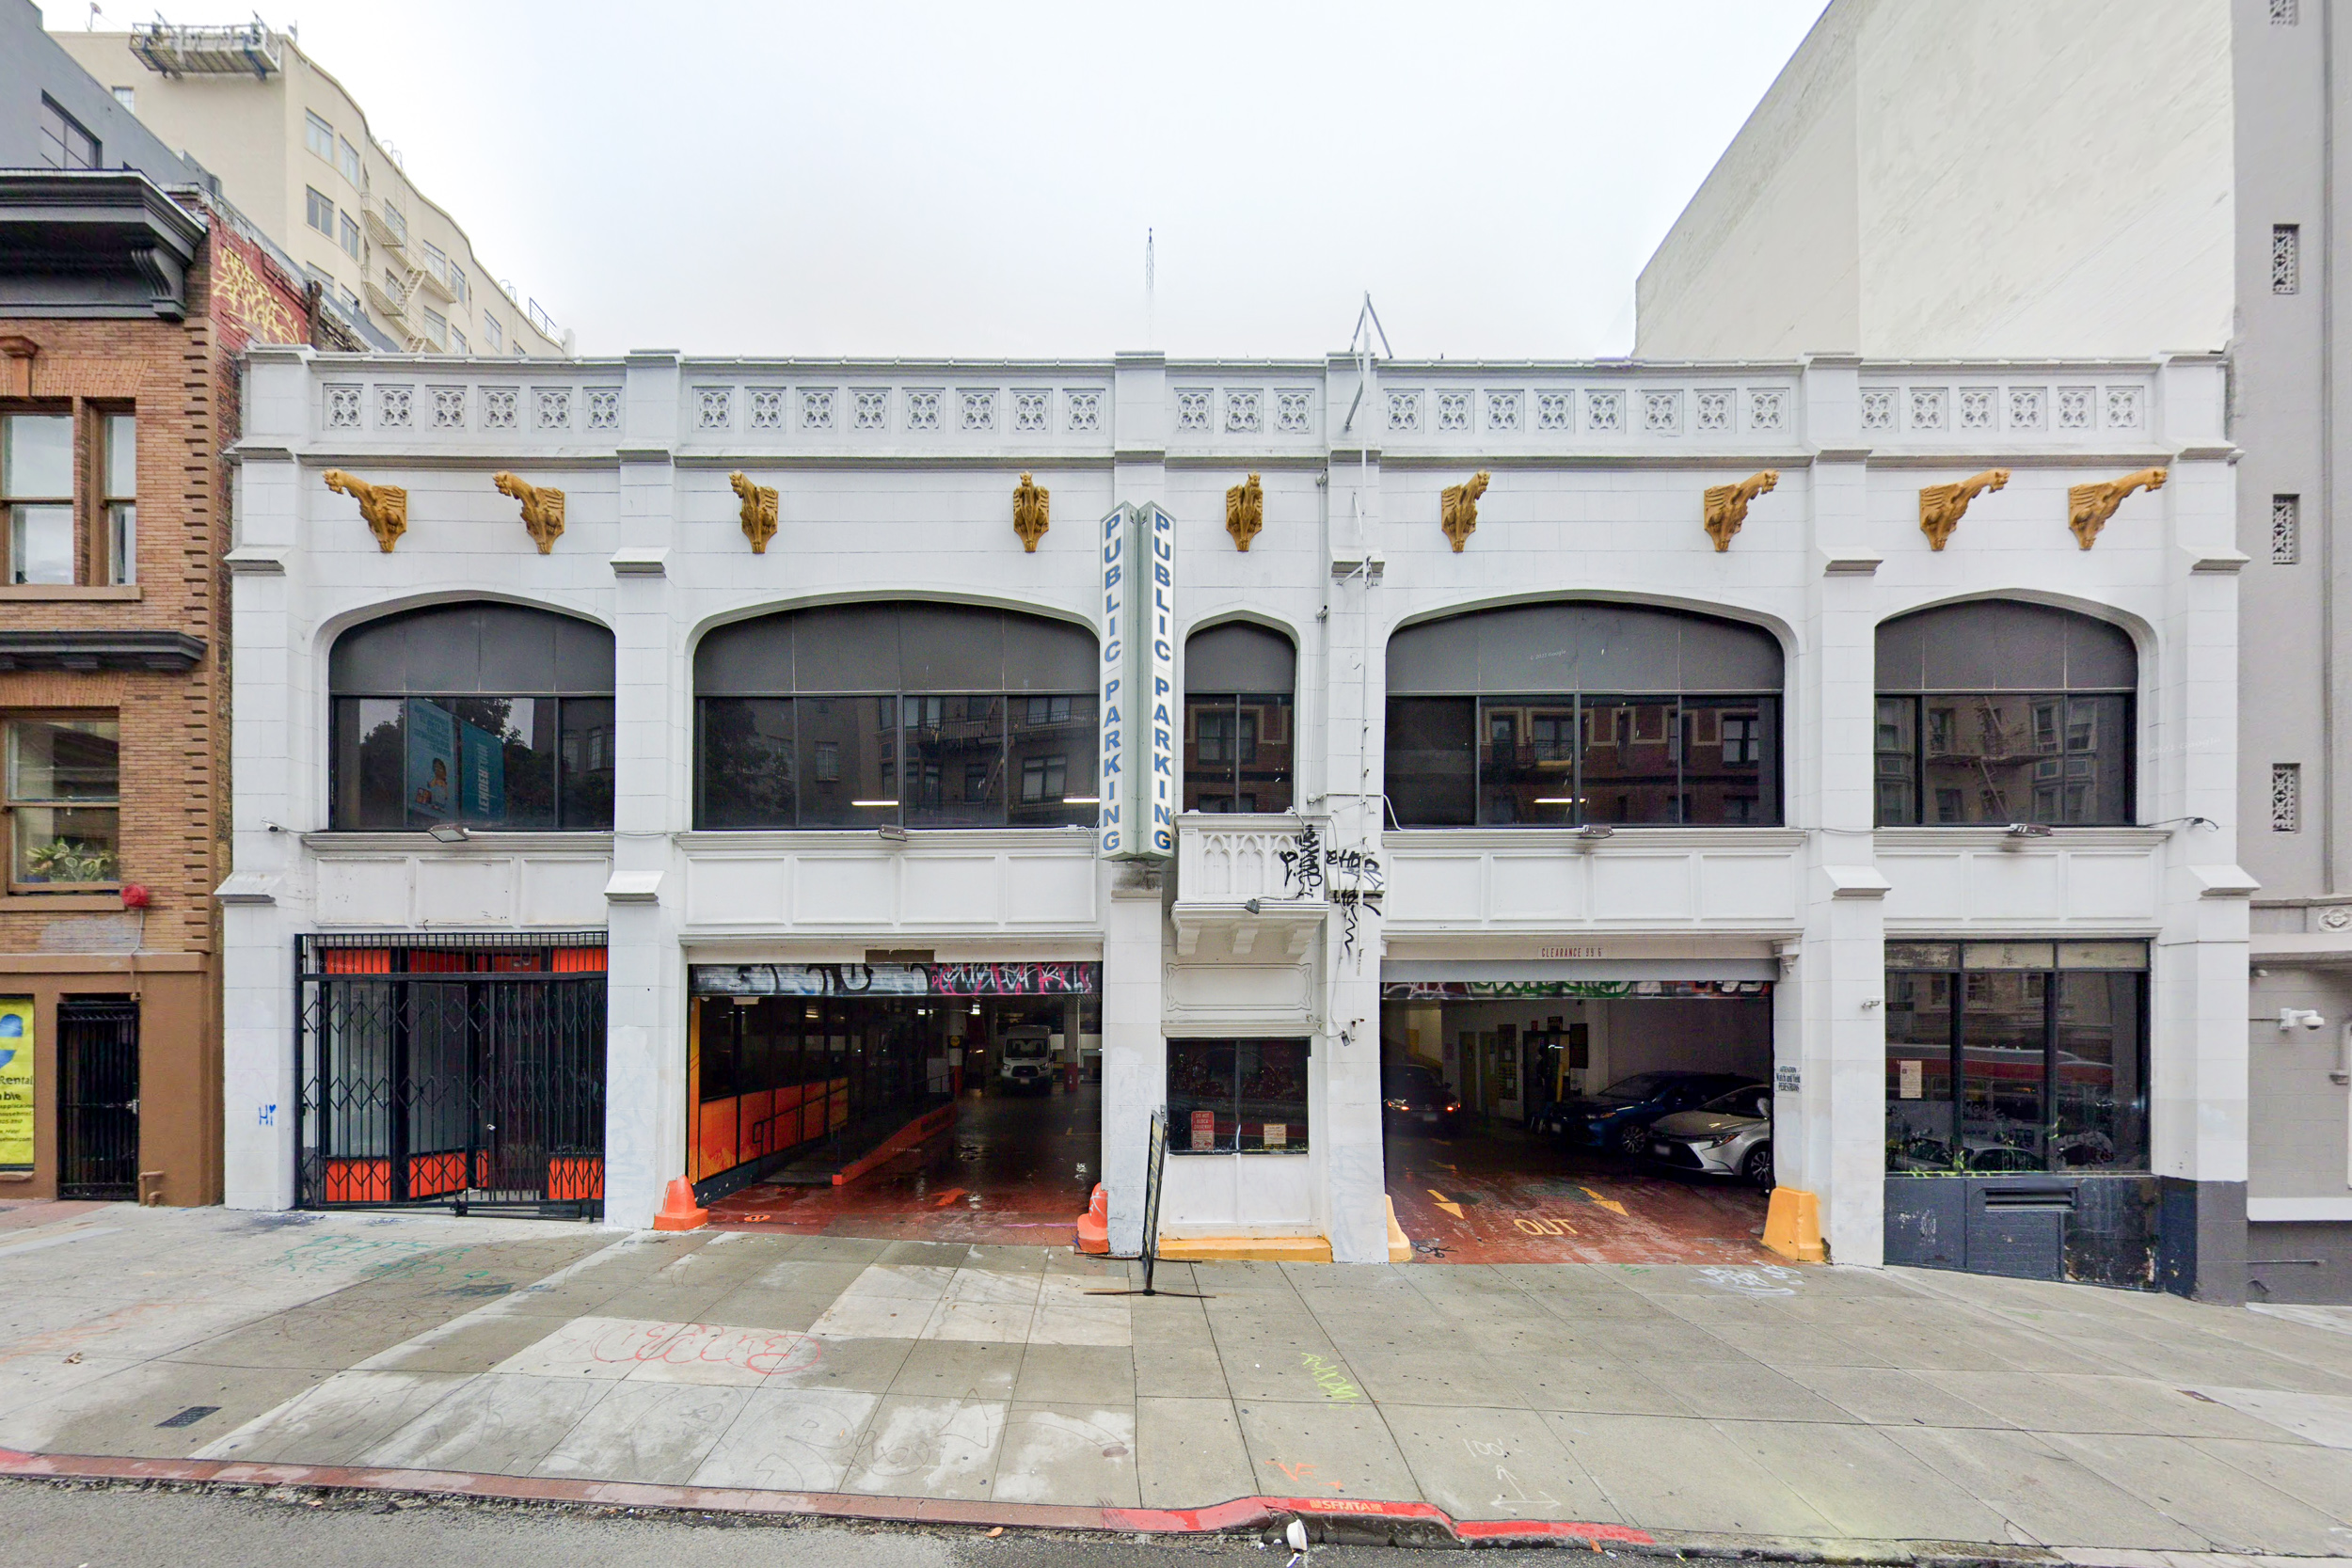 550 O'Farrell Street garage existing condition, image via Google Street View